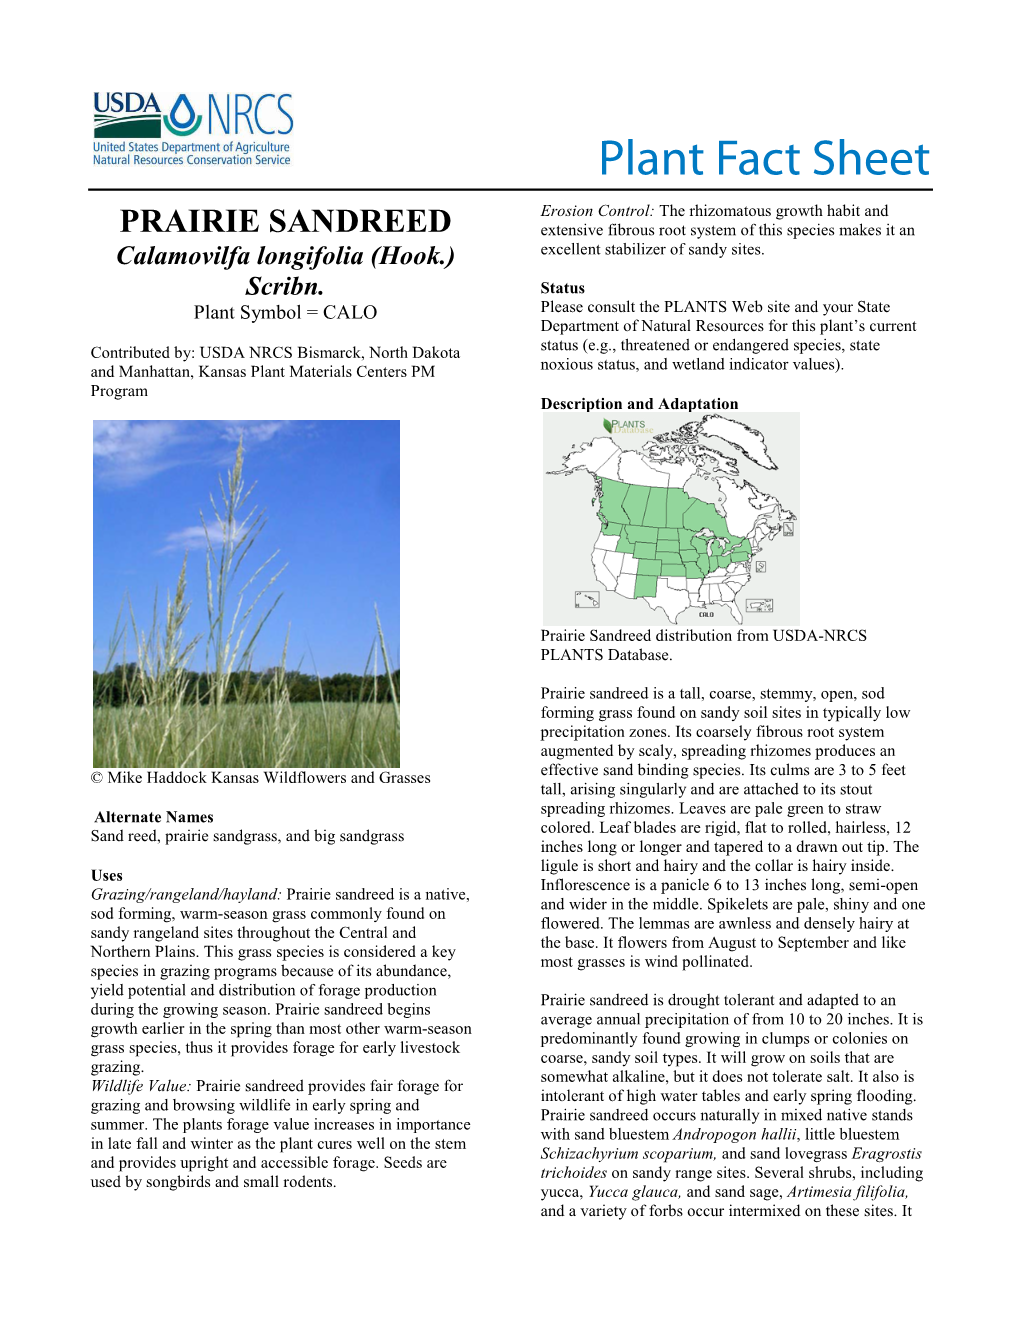 Prairie Sandreed Plant Fact Sheet